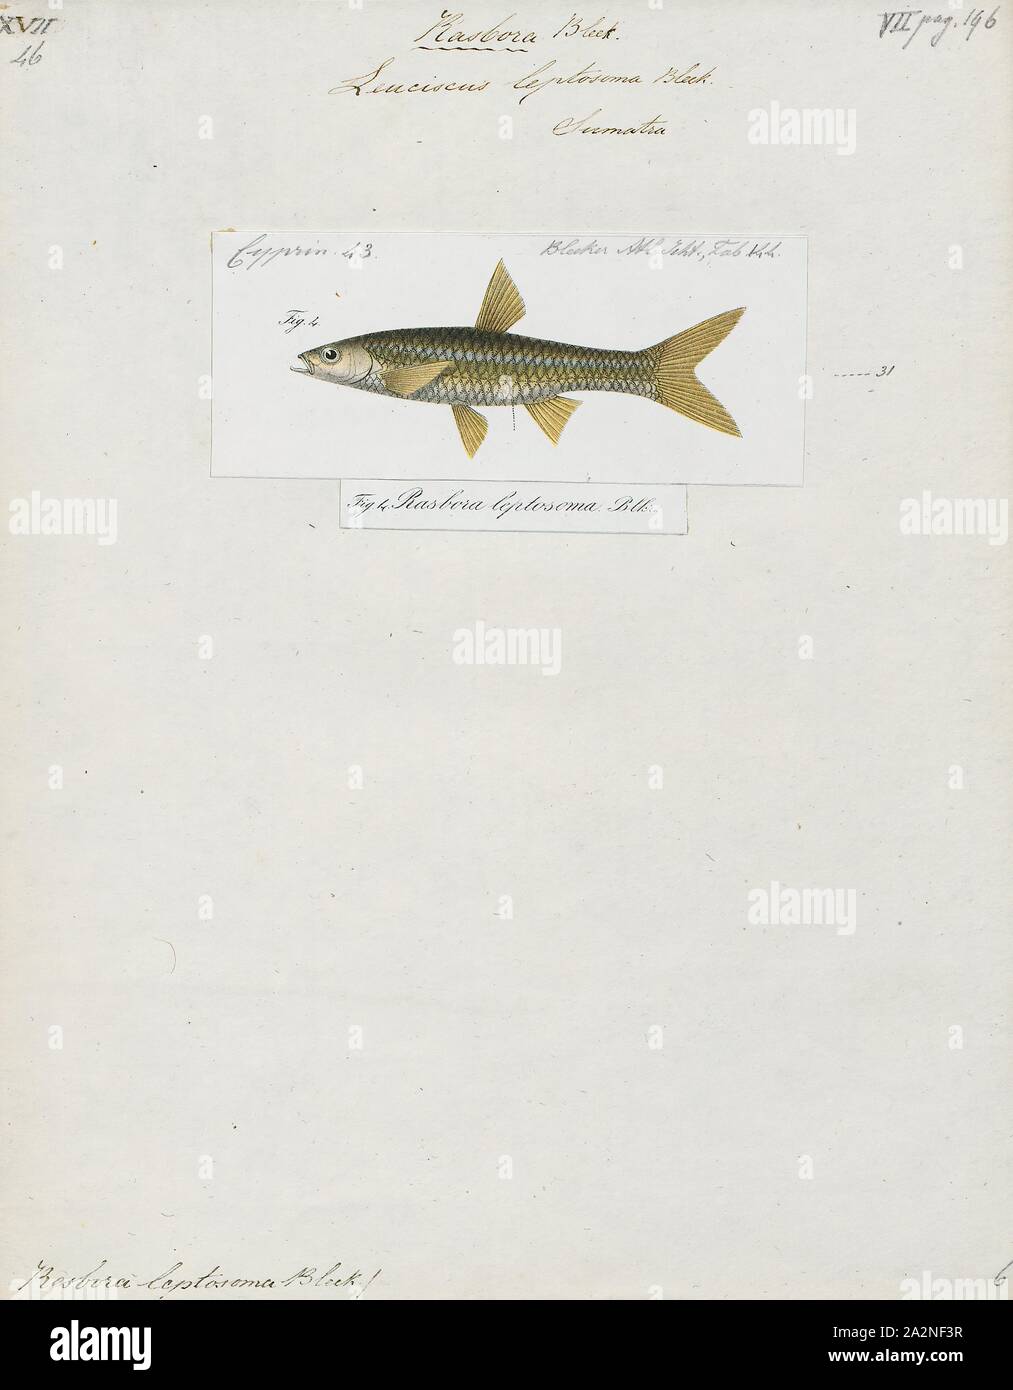 Rasbora leptosoma, Print, The copperstripe rasbora (Rasbora leptosoma) is a species of ray-finned fish in the genus Rasbora from Sumatra, Indonesia., 1700-1880 Stock Photo